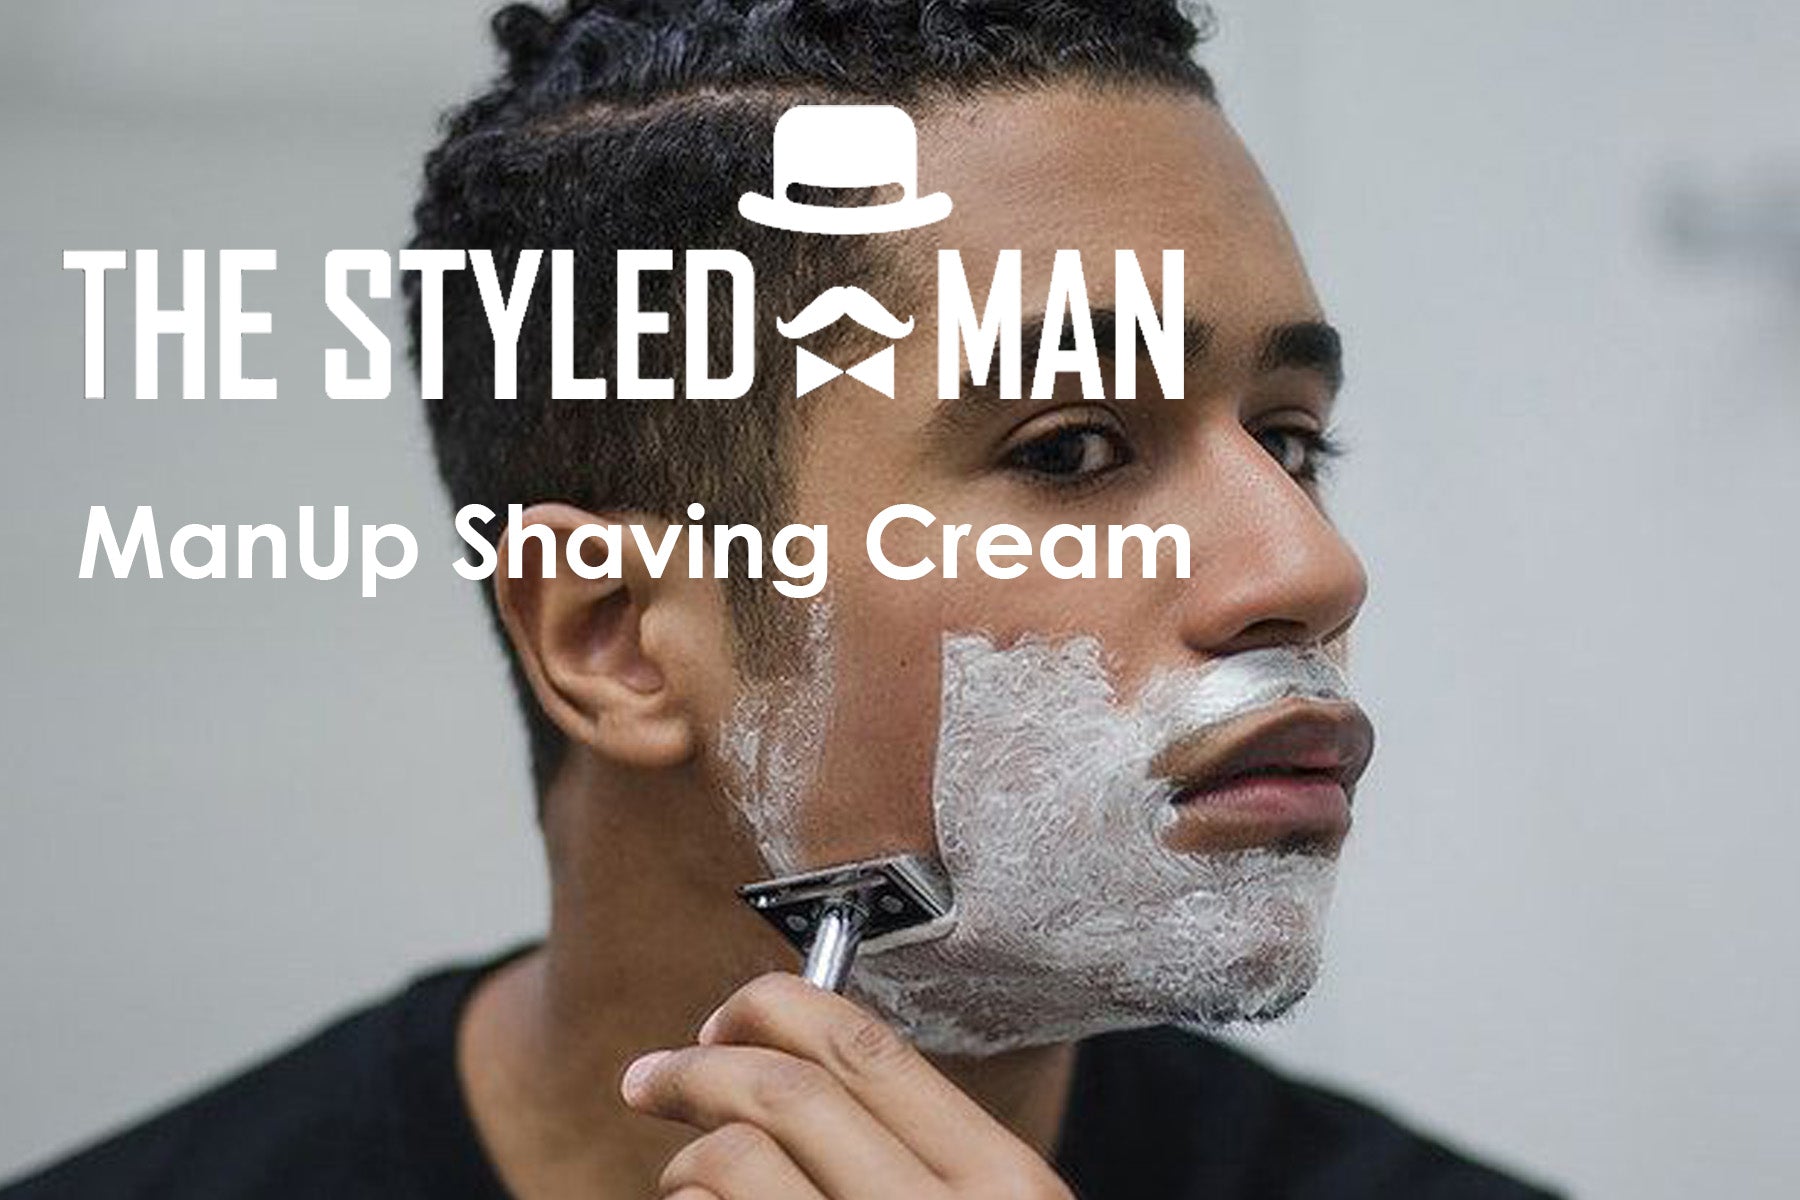 ManUp Shaving Cream